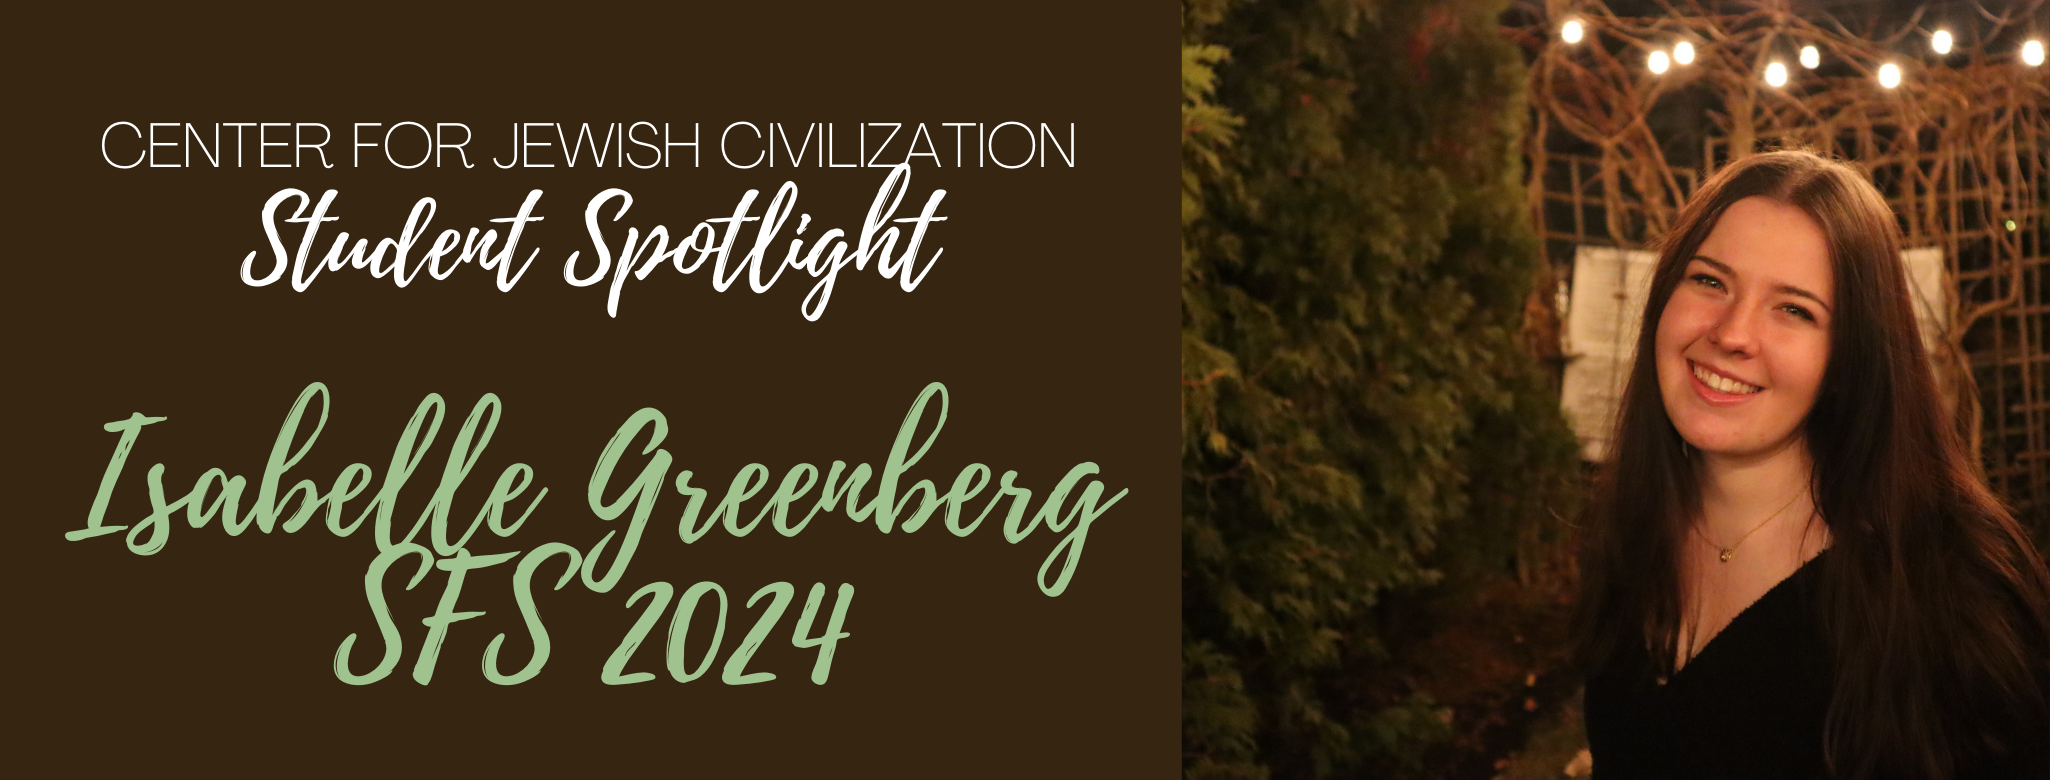 CJC Student Spotlight: Isabelle Greenberg (SFS 2024)